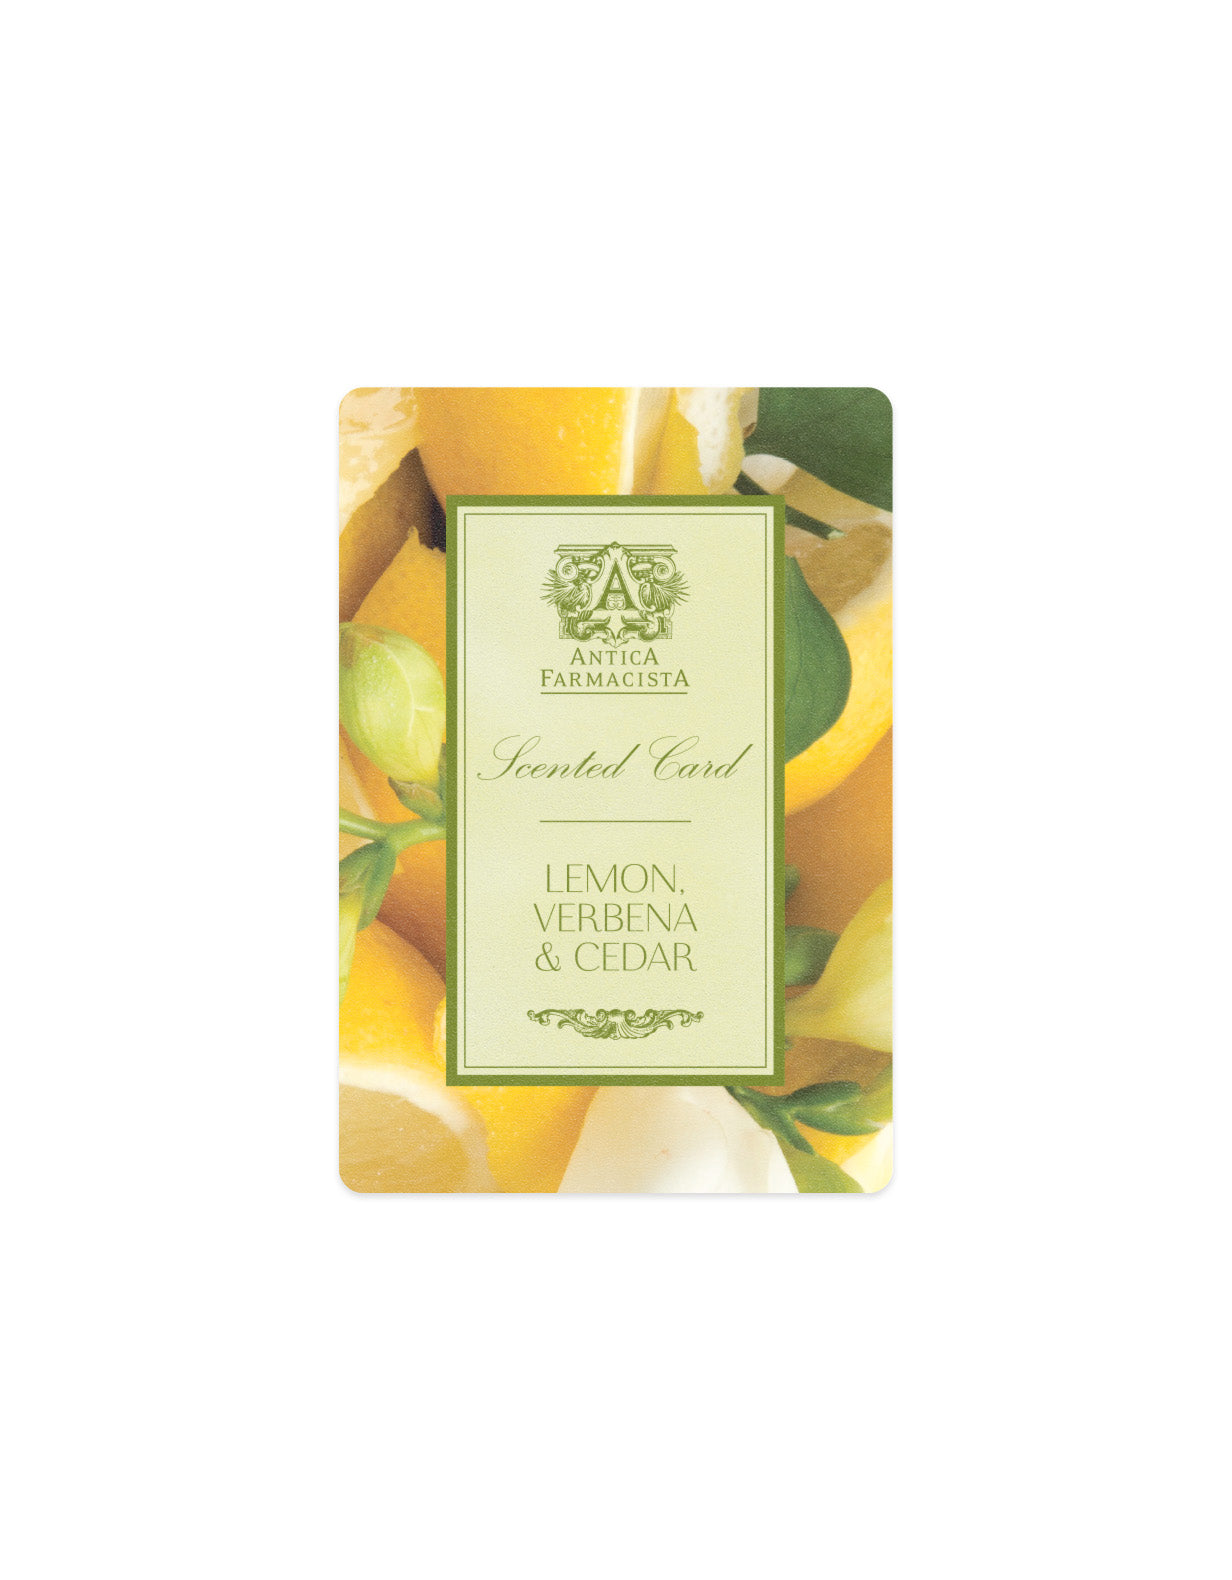 GWP - Scented Card - Lemon, Verbena & Cedar